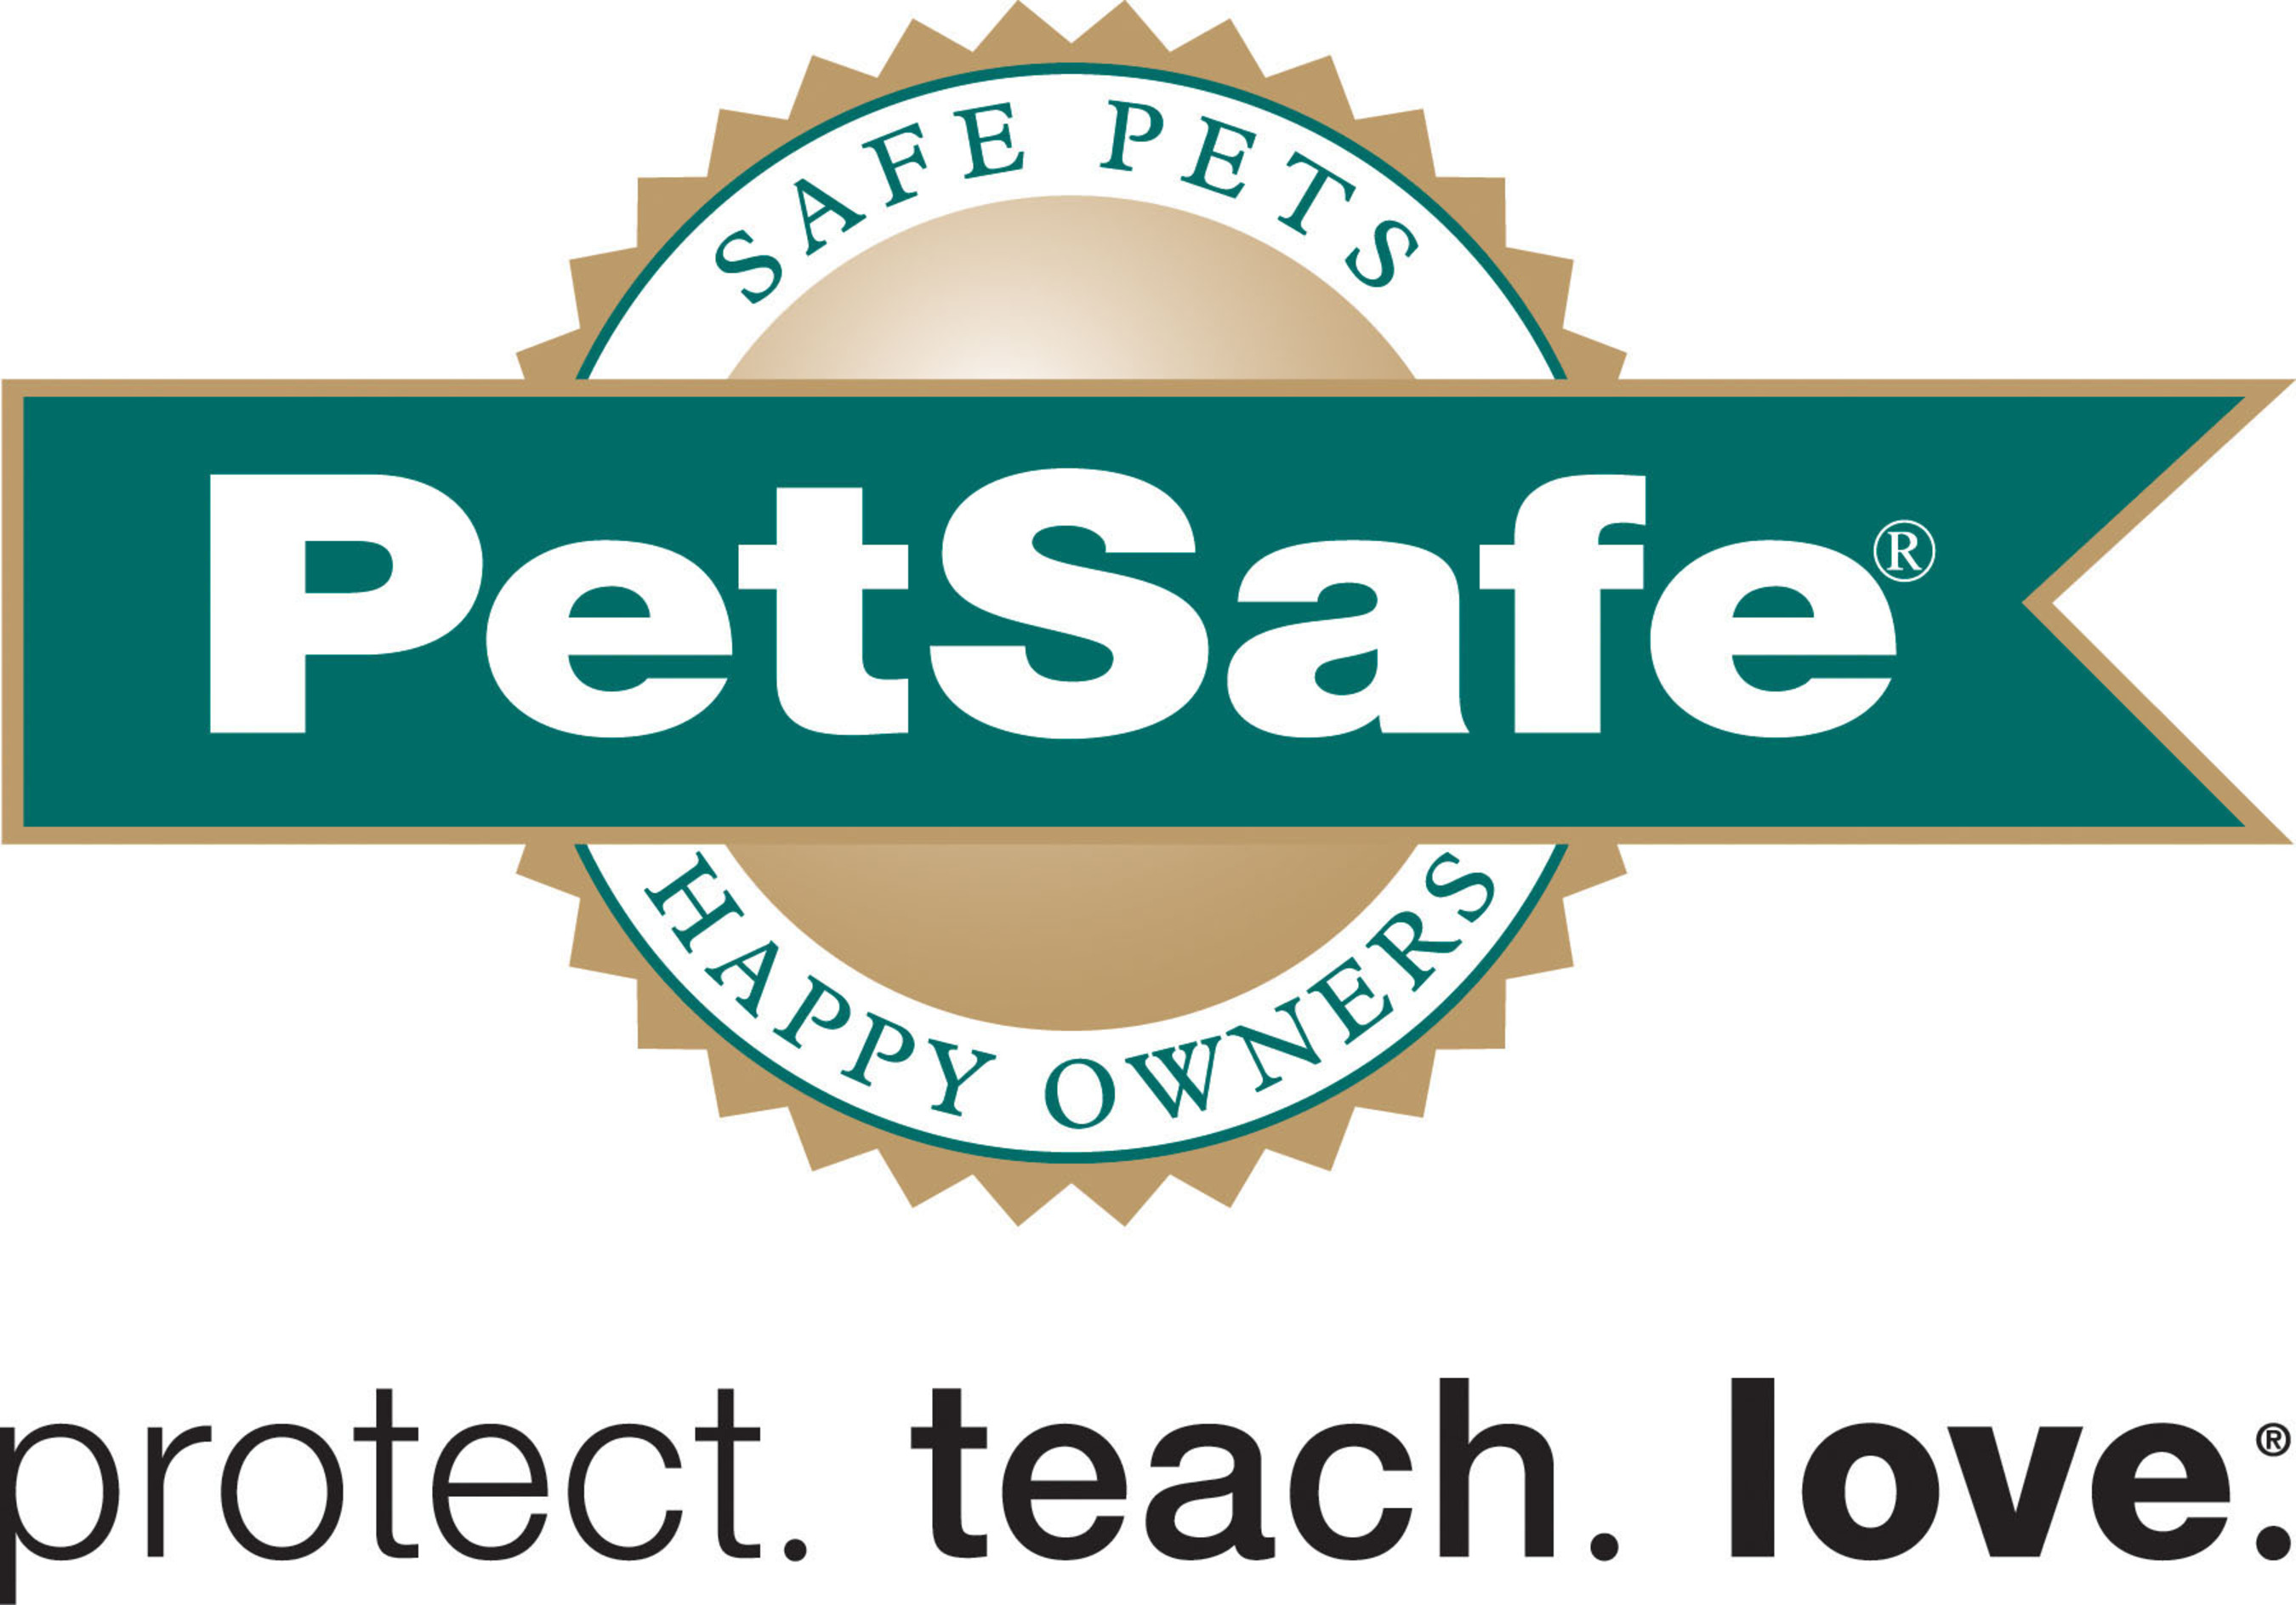 PetSafe brand logo